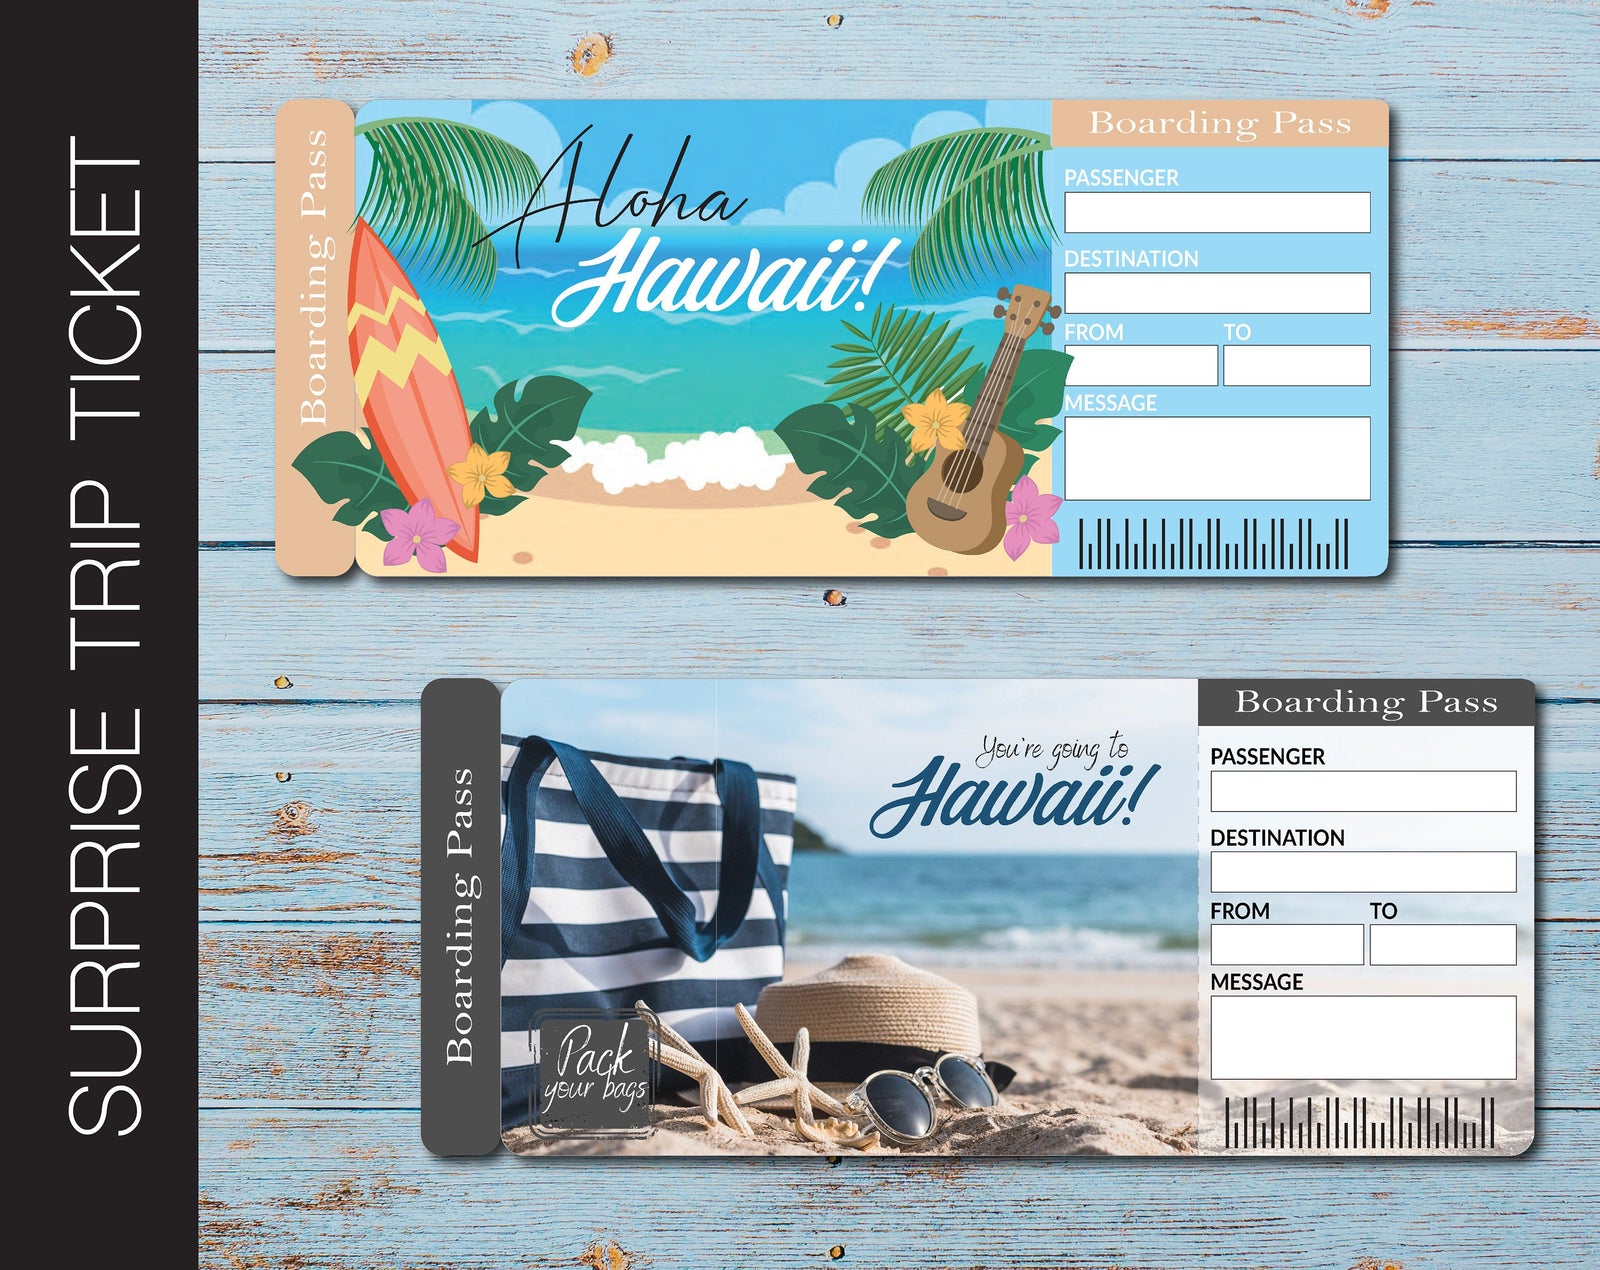 cheap hawaii tickets round trip